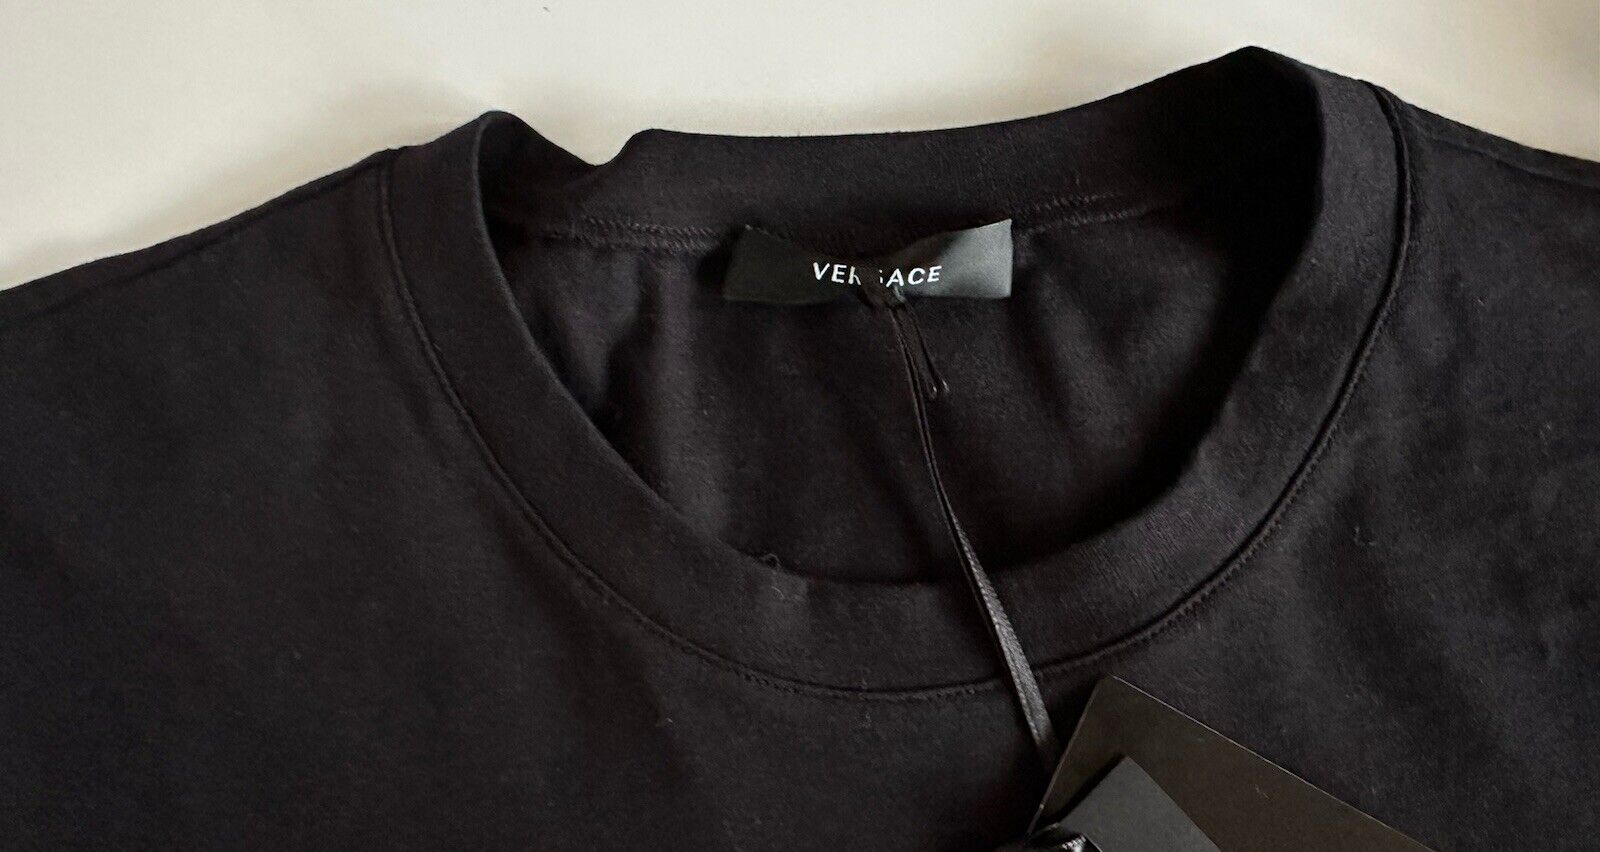 NWT Versace Logo Series Crystal-embellished T-Shirt Black 8 US (42 Eu) 1A00769